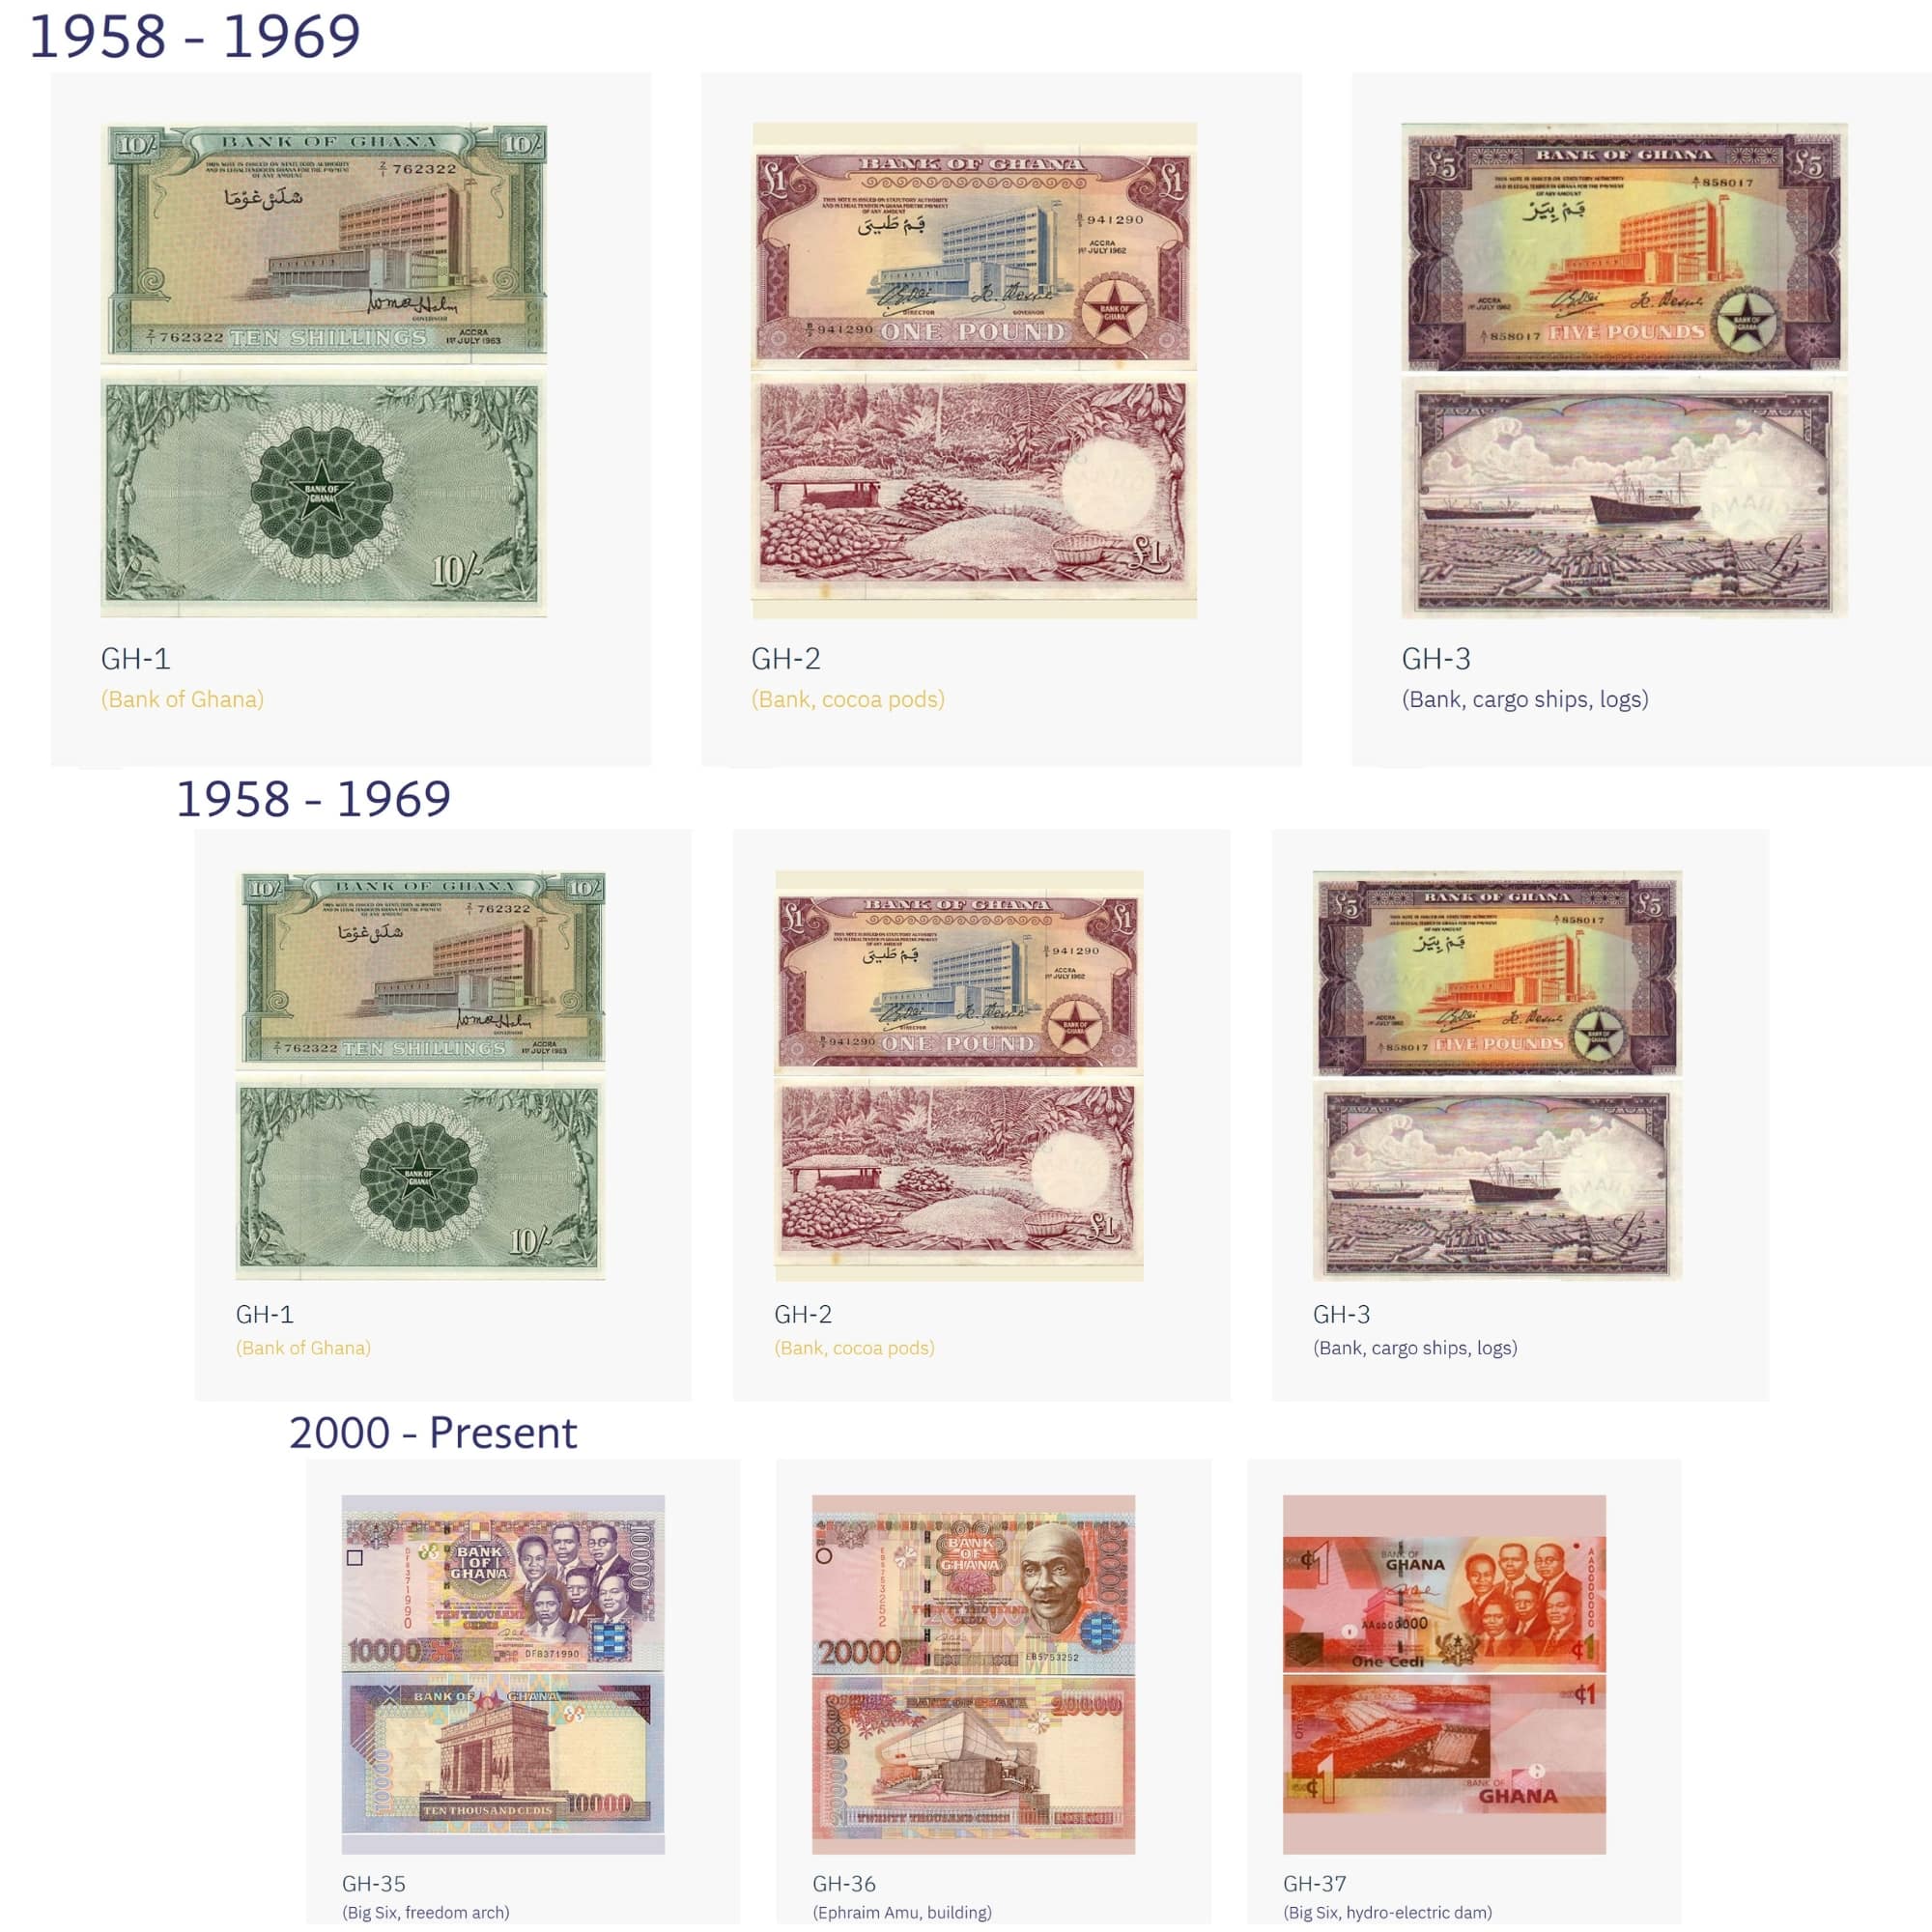 Ghana Currency (Ghanaian Cedi) Currency of Ghana 2